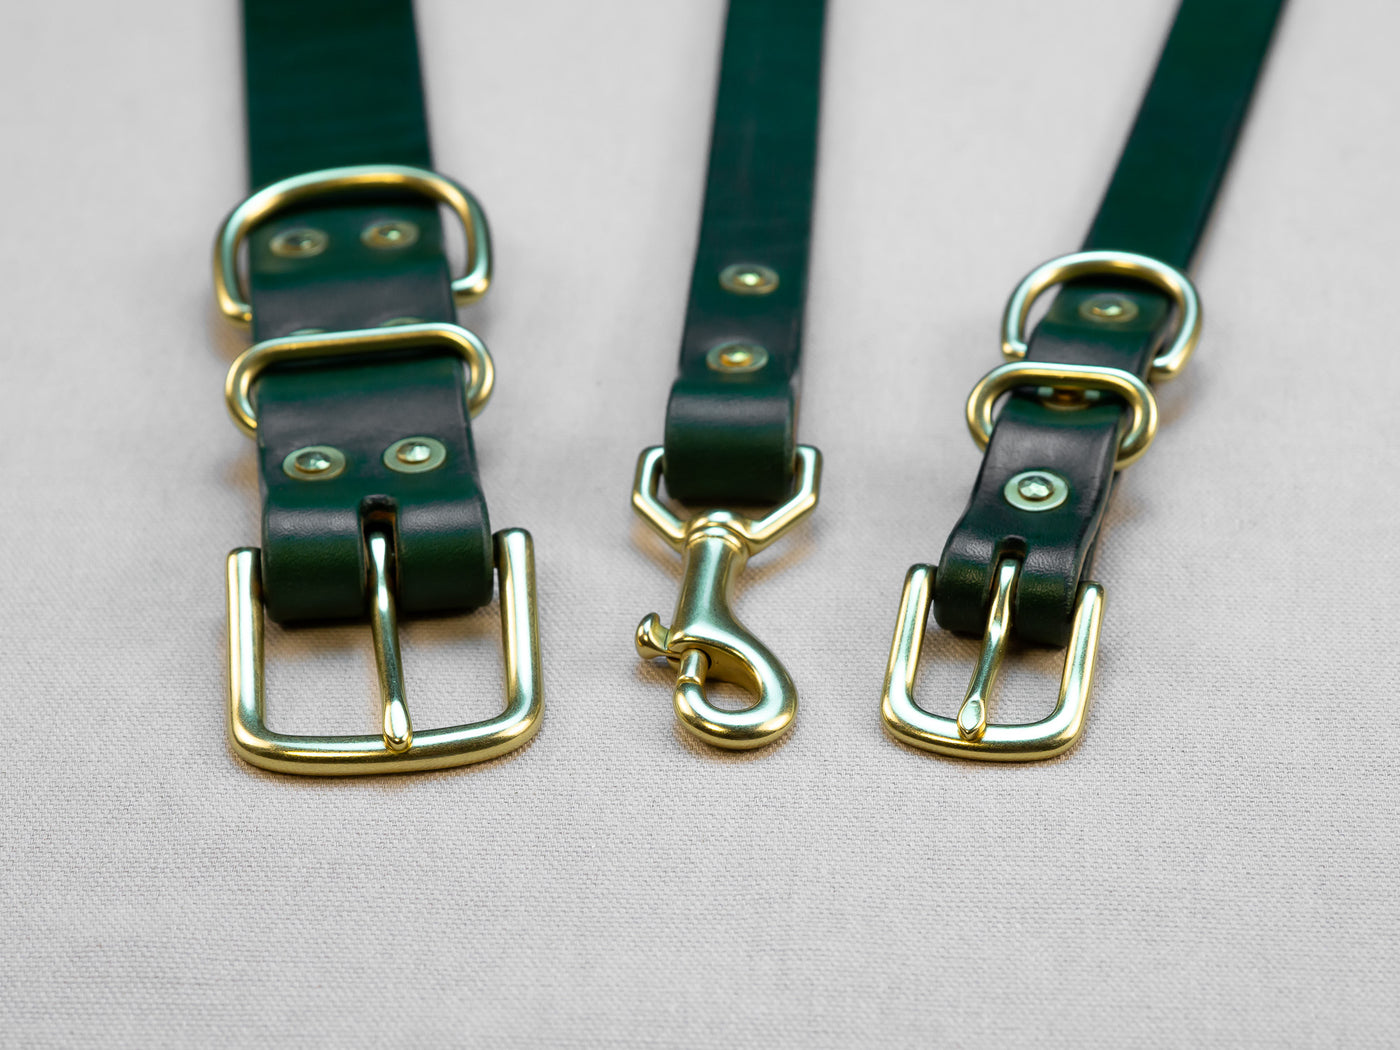 Leather Belt Dog Collar & Lead Combo - Zucchini Green English Bridle Leather - Atlas Leathercraft - Handmade Australian Leather Goods